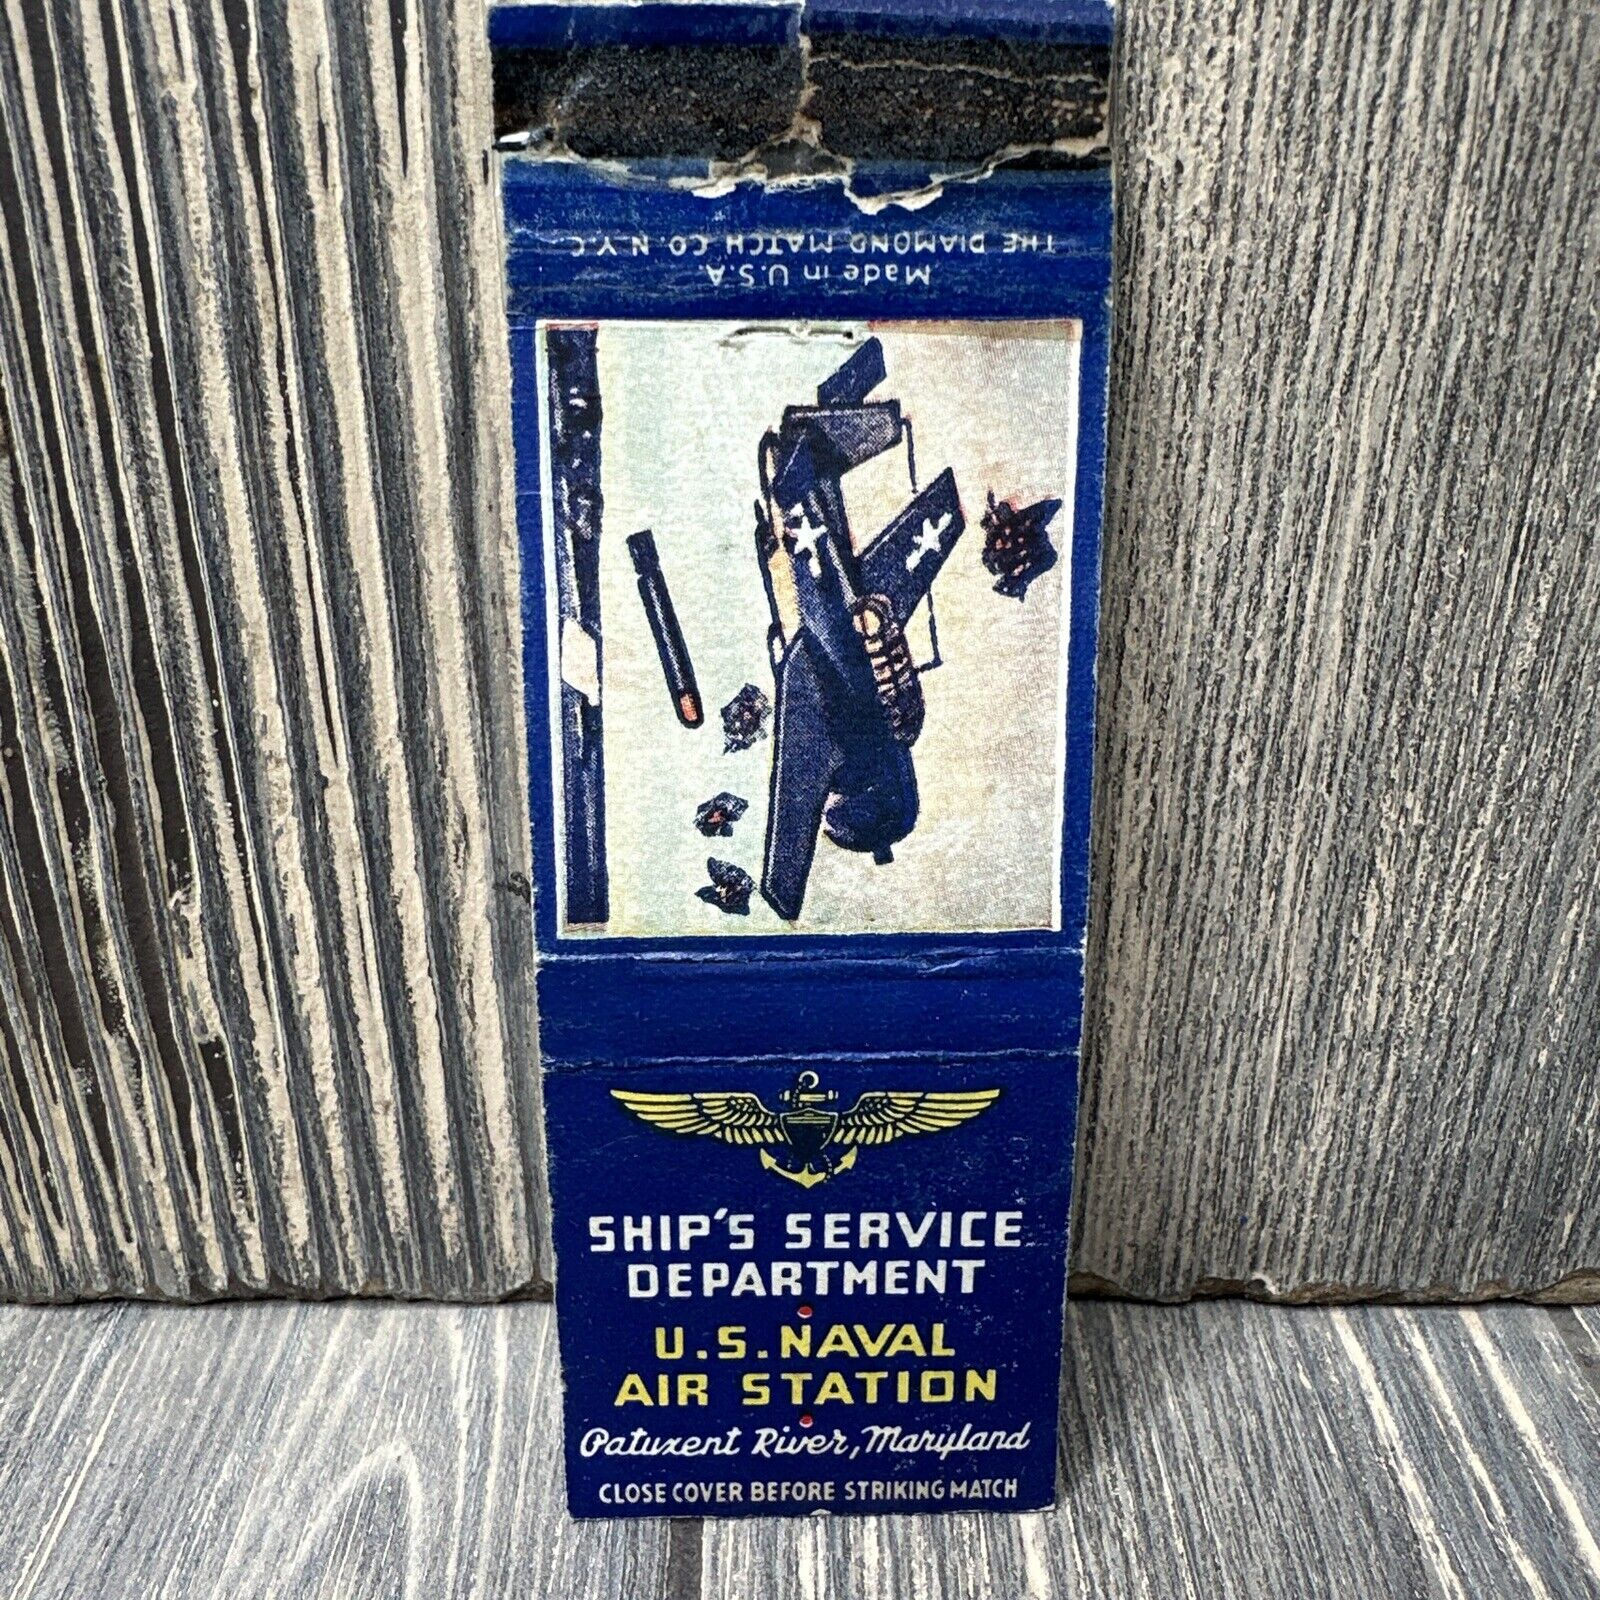 Vintage Ship's Service Department Naval Air Station Matchbook Advertisement